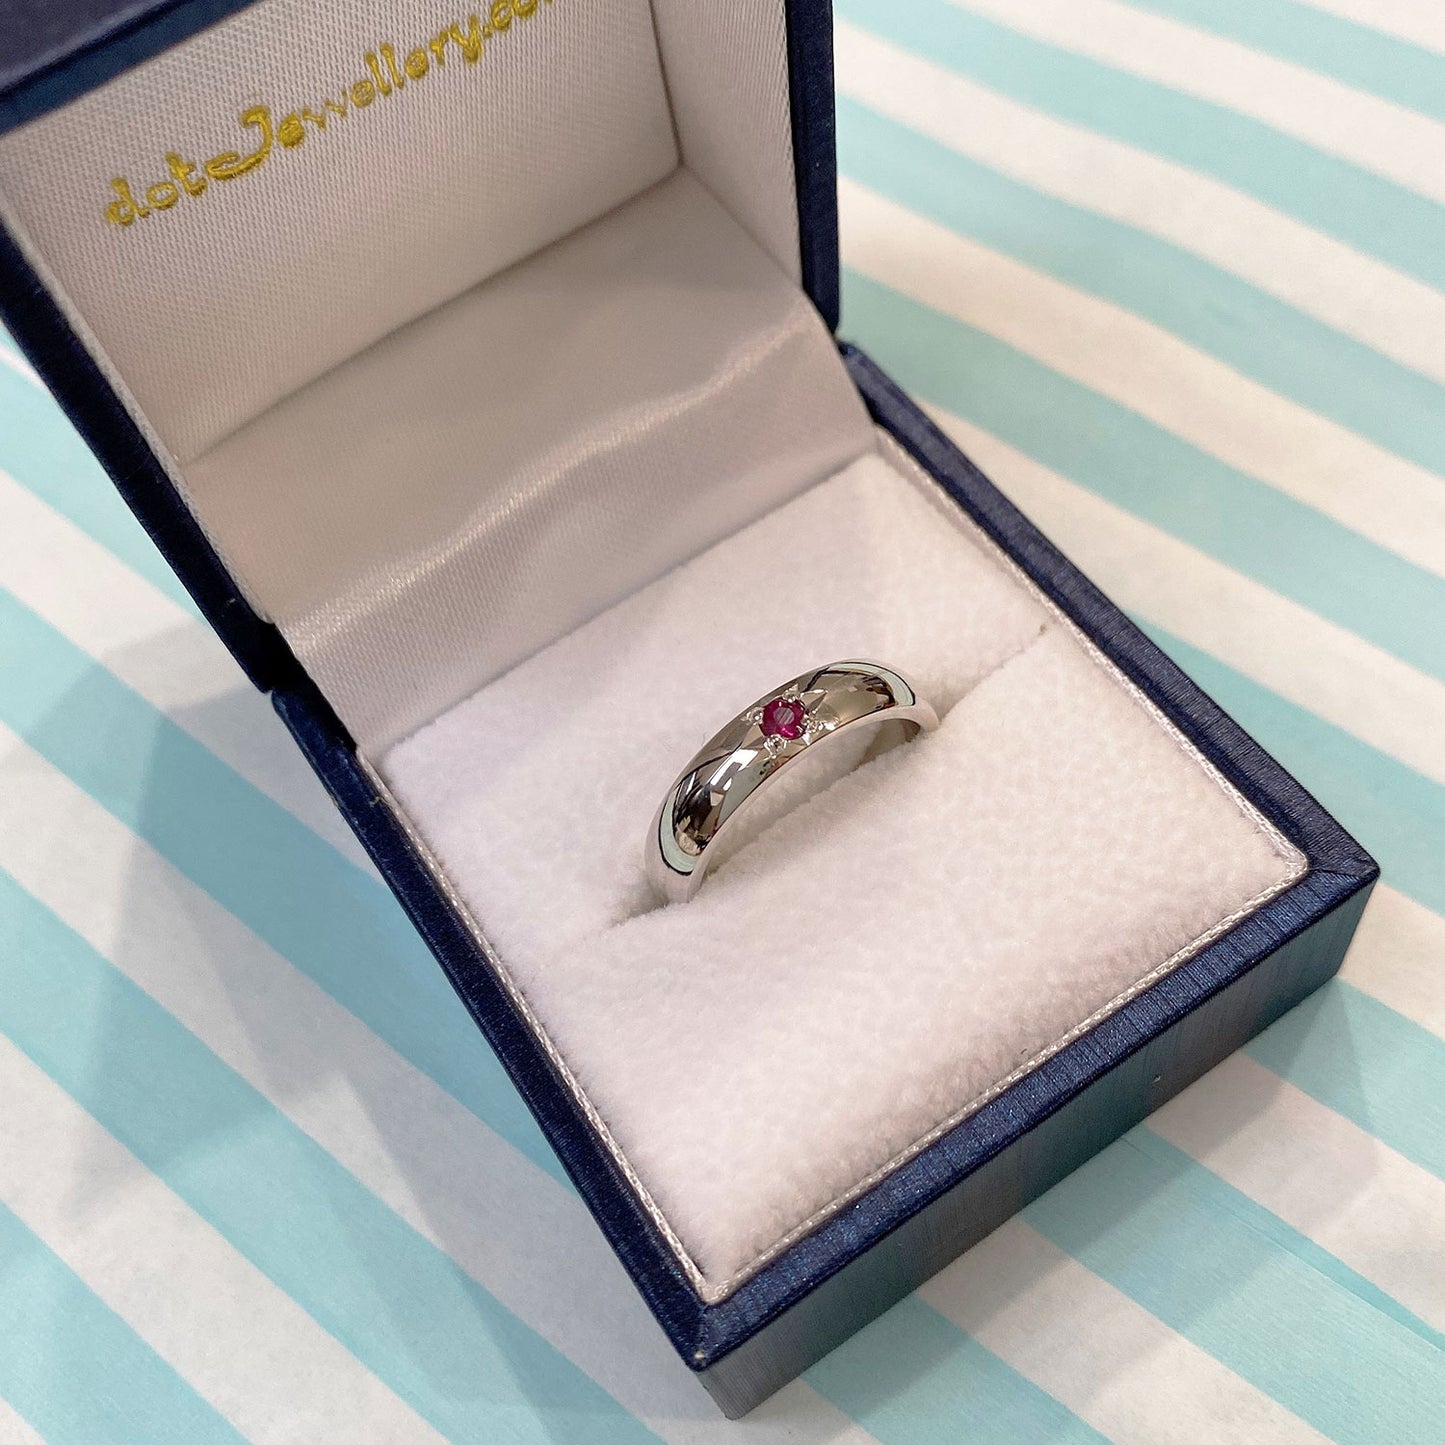 Ruby Star Set 950 Palladium 4mm Wedding Ring